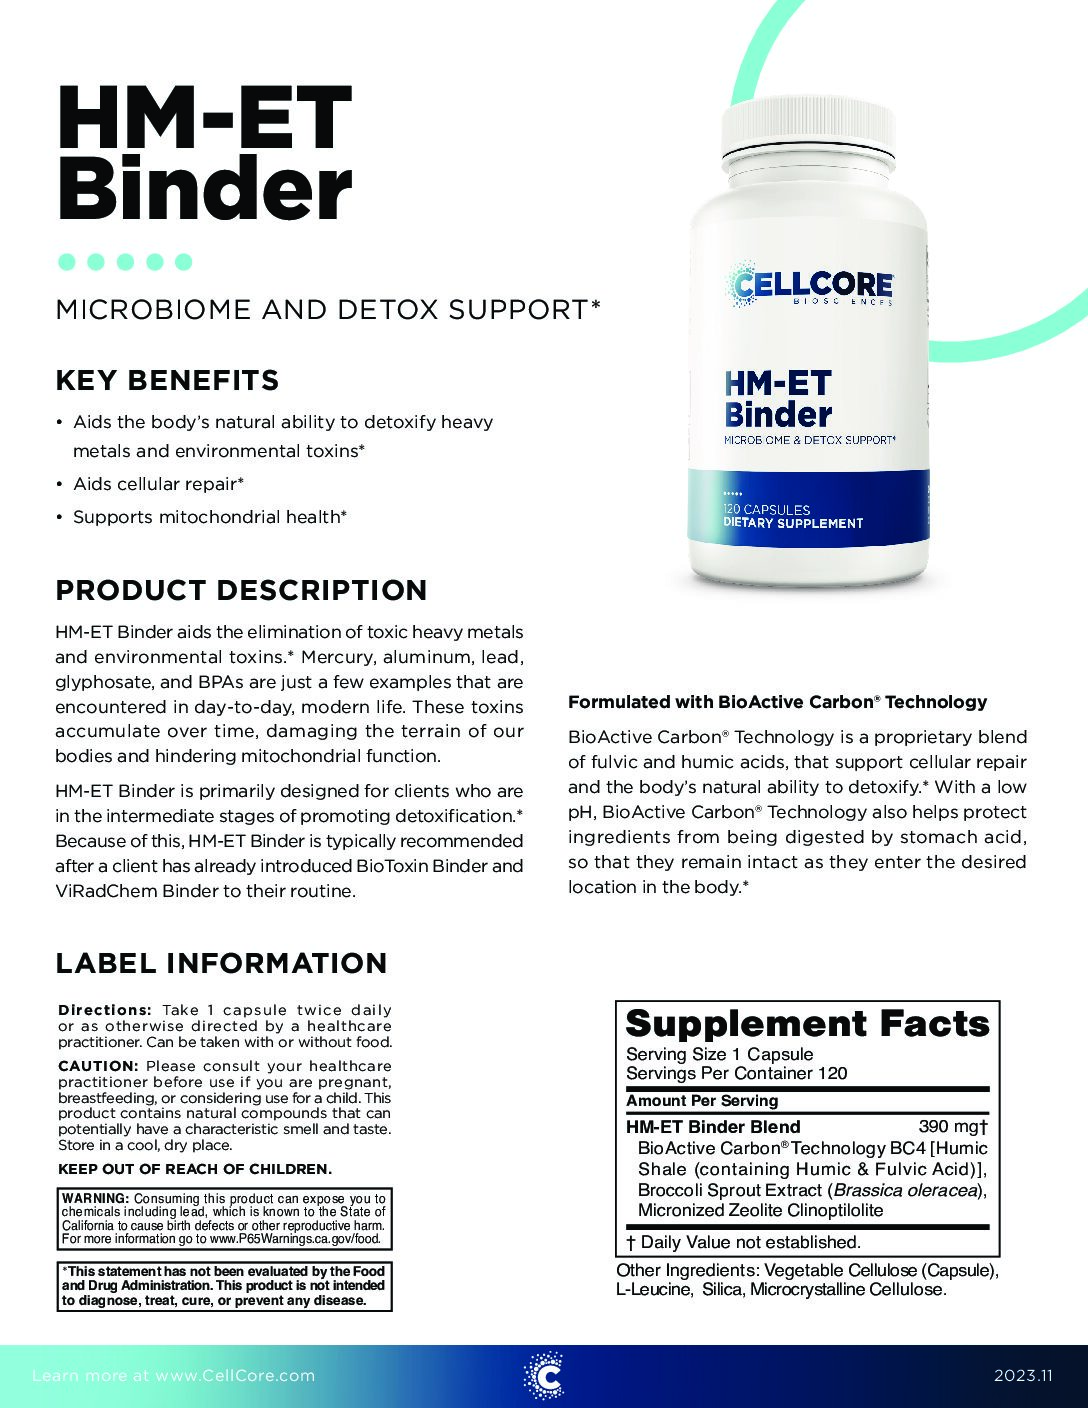 HM-ET Binder † - Environmental Exposure Support - CellCore Biosciences